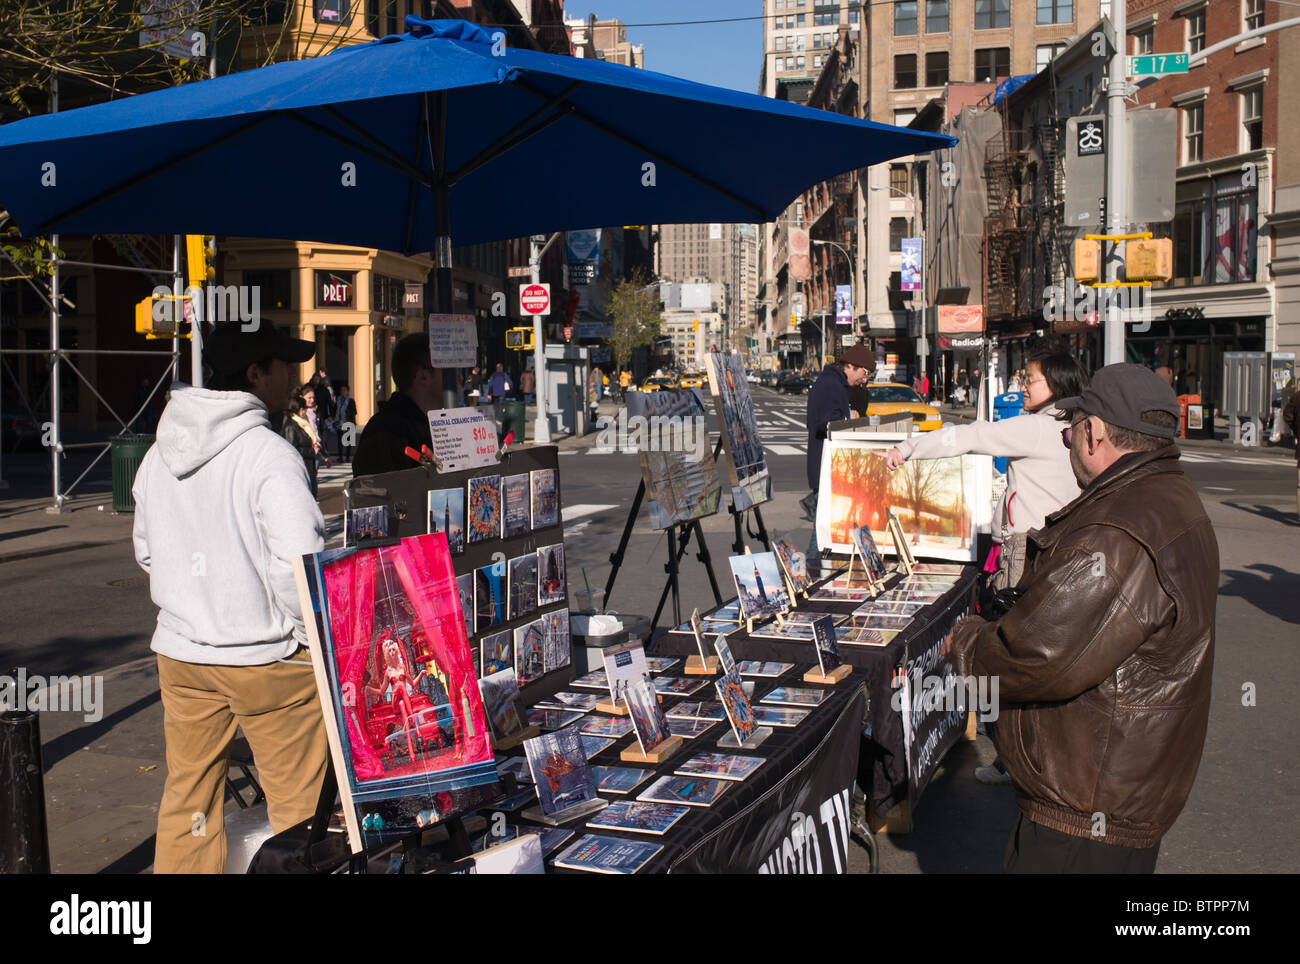 A street vendor selling art in Union Square Park Stock Photo